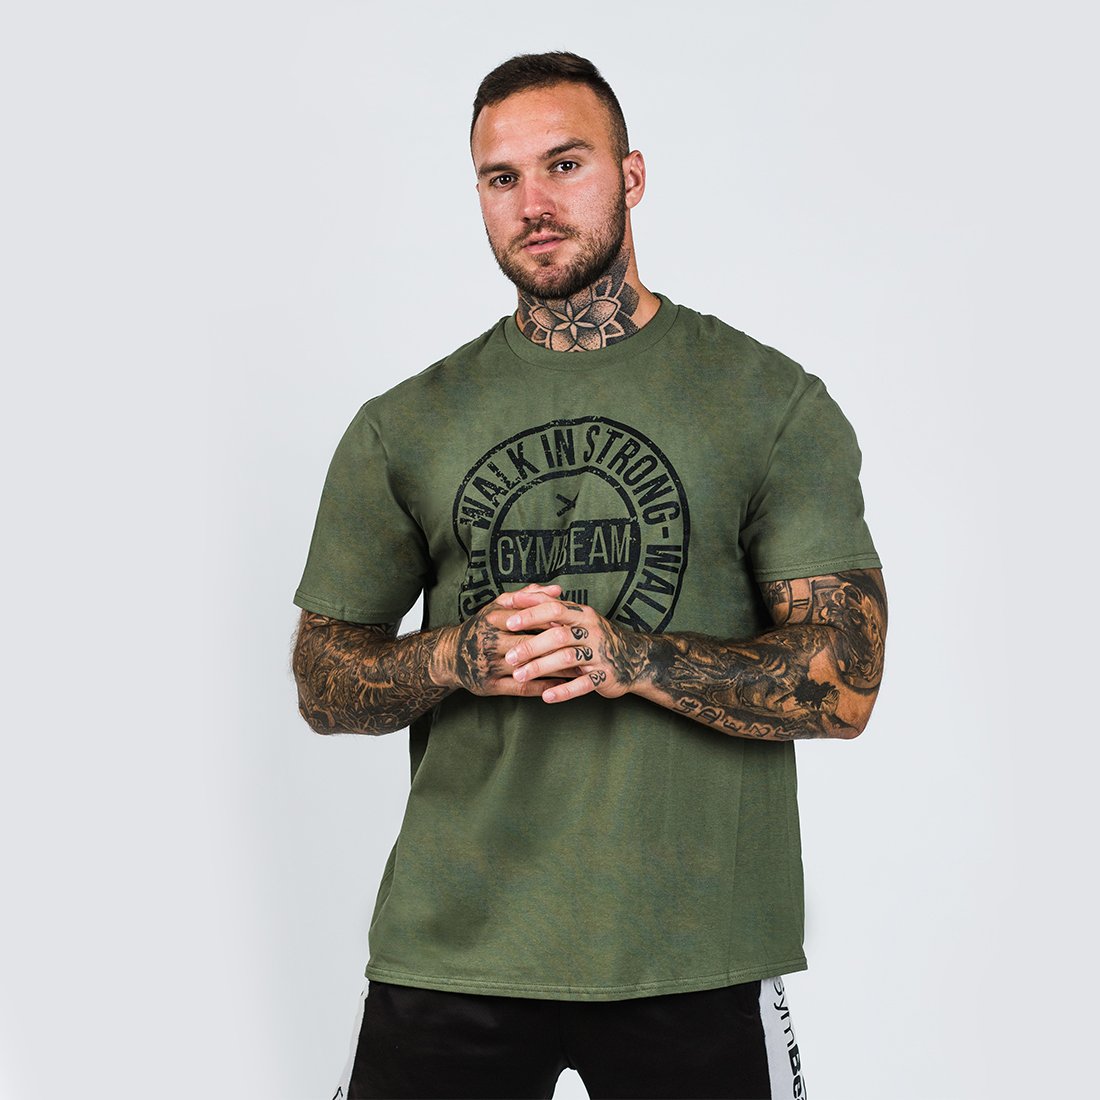 Military Green Tee Shirts Shop, 53% OFF | espirituviajero.com